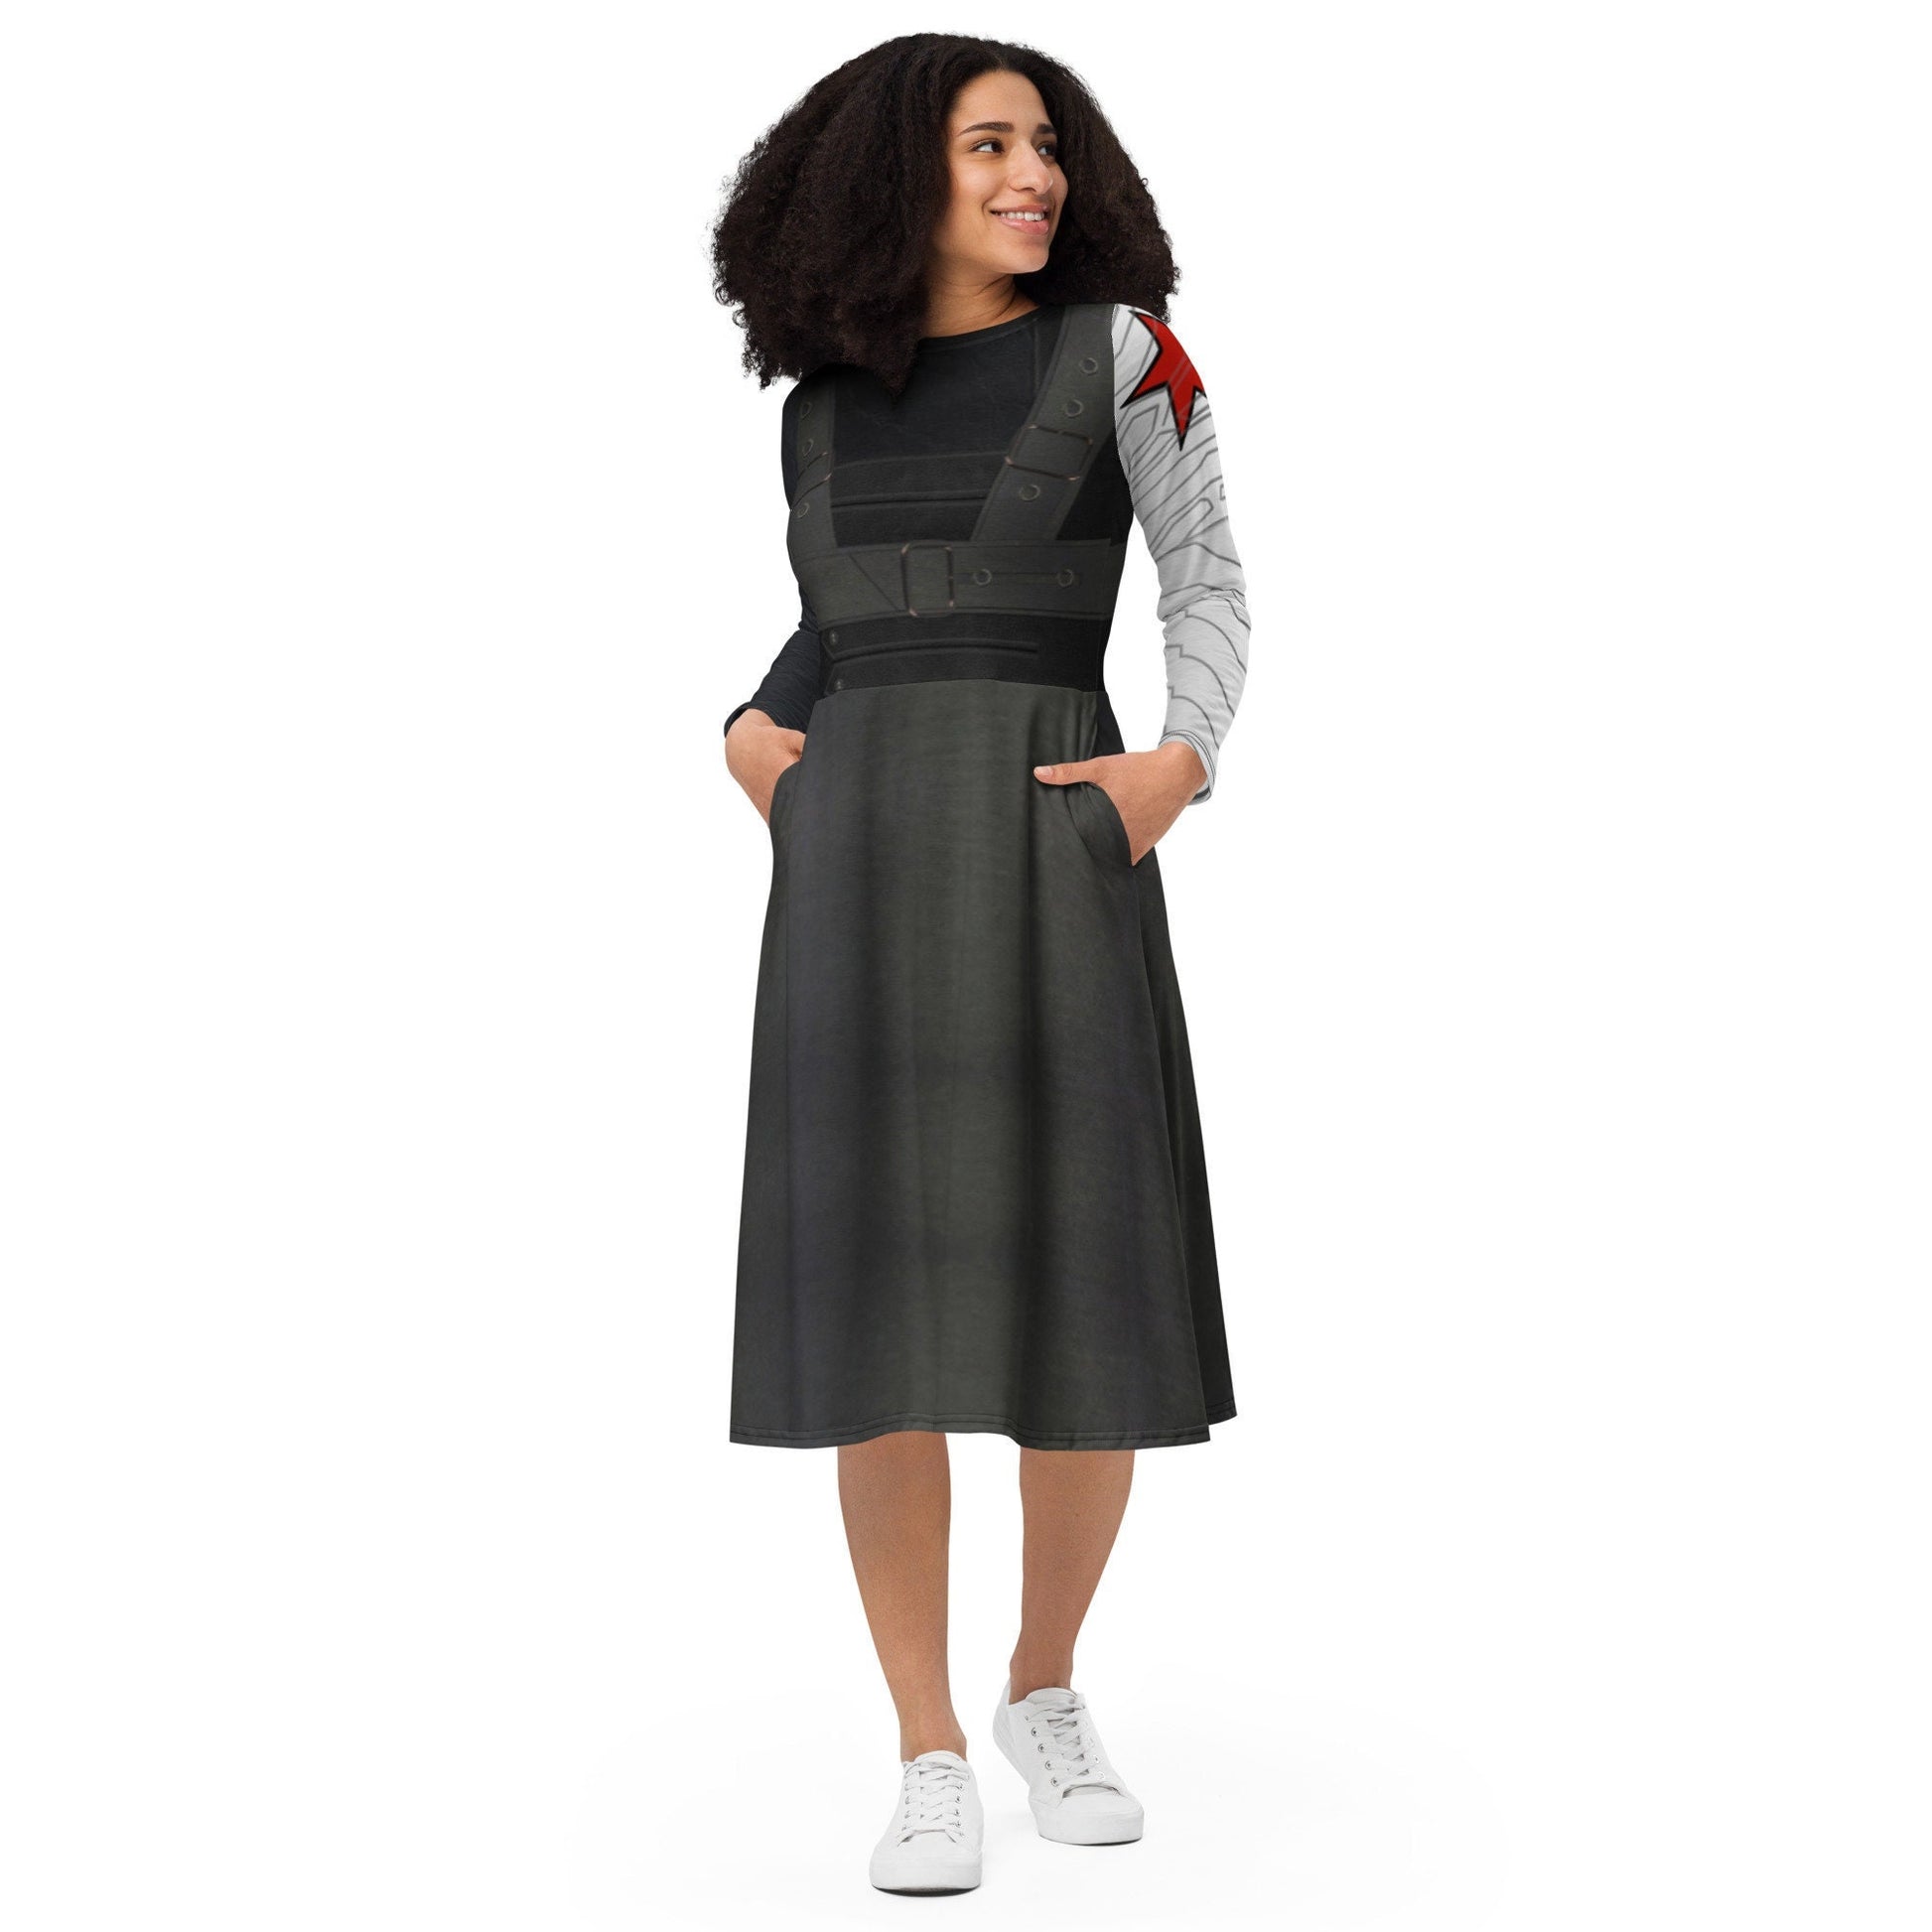 RUSH ORDER: Bucky Winter Soldier Inspired All-over print long sleeve midi dress